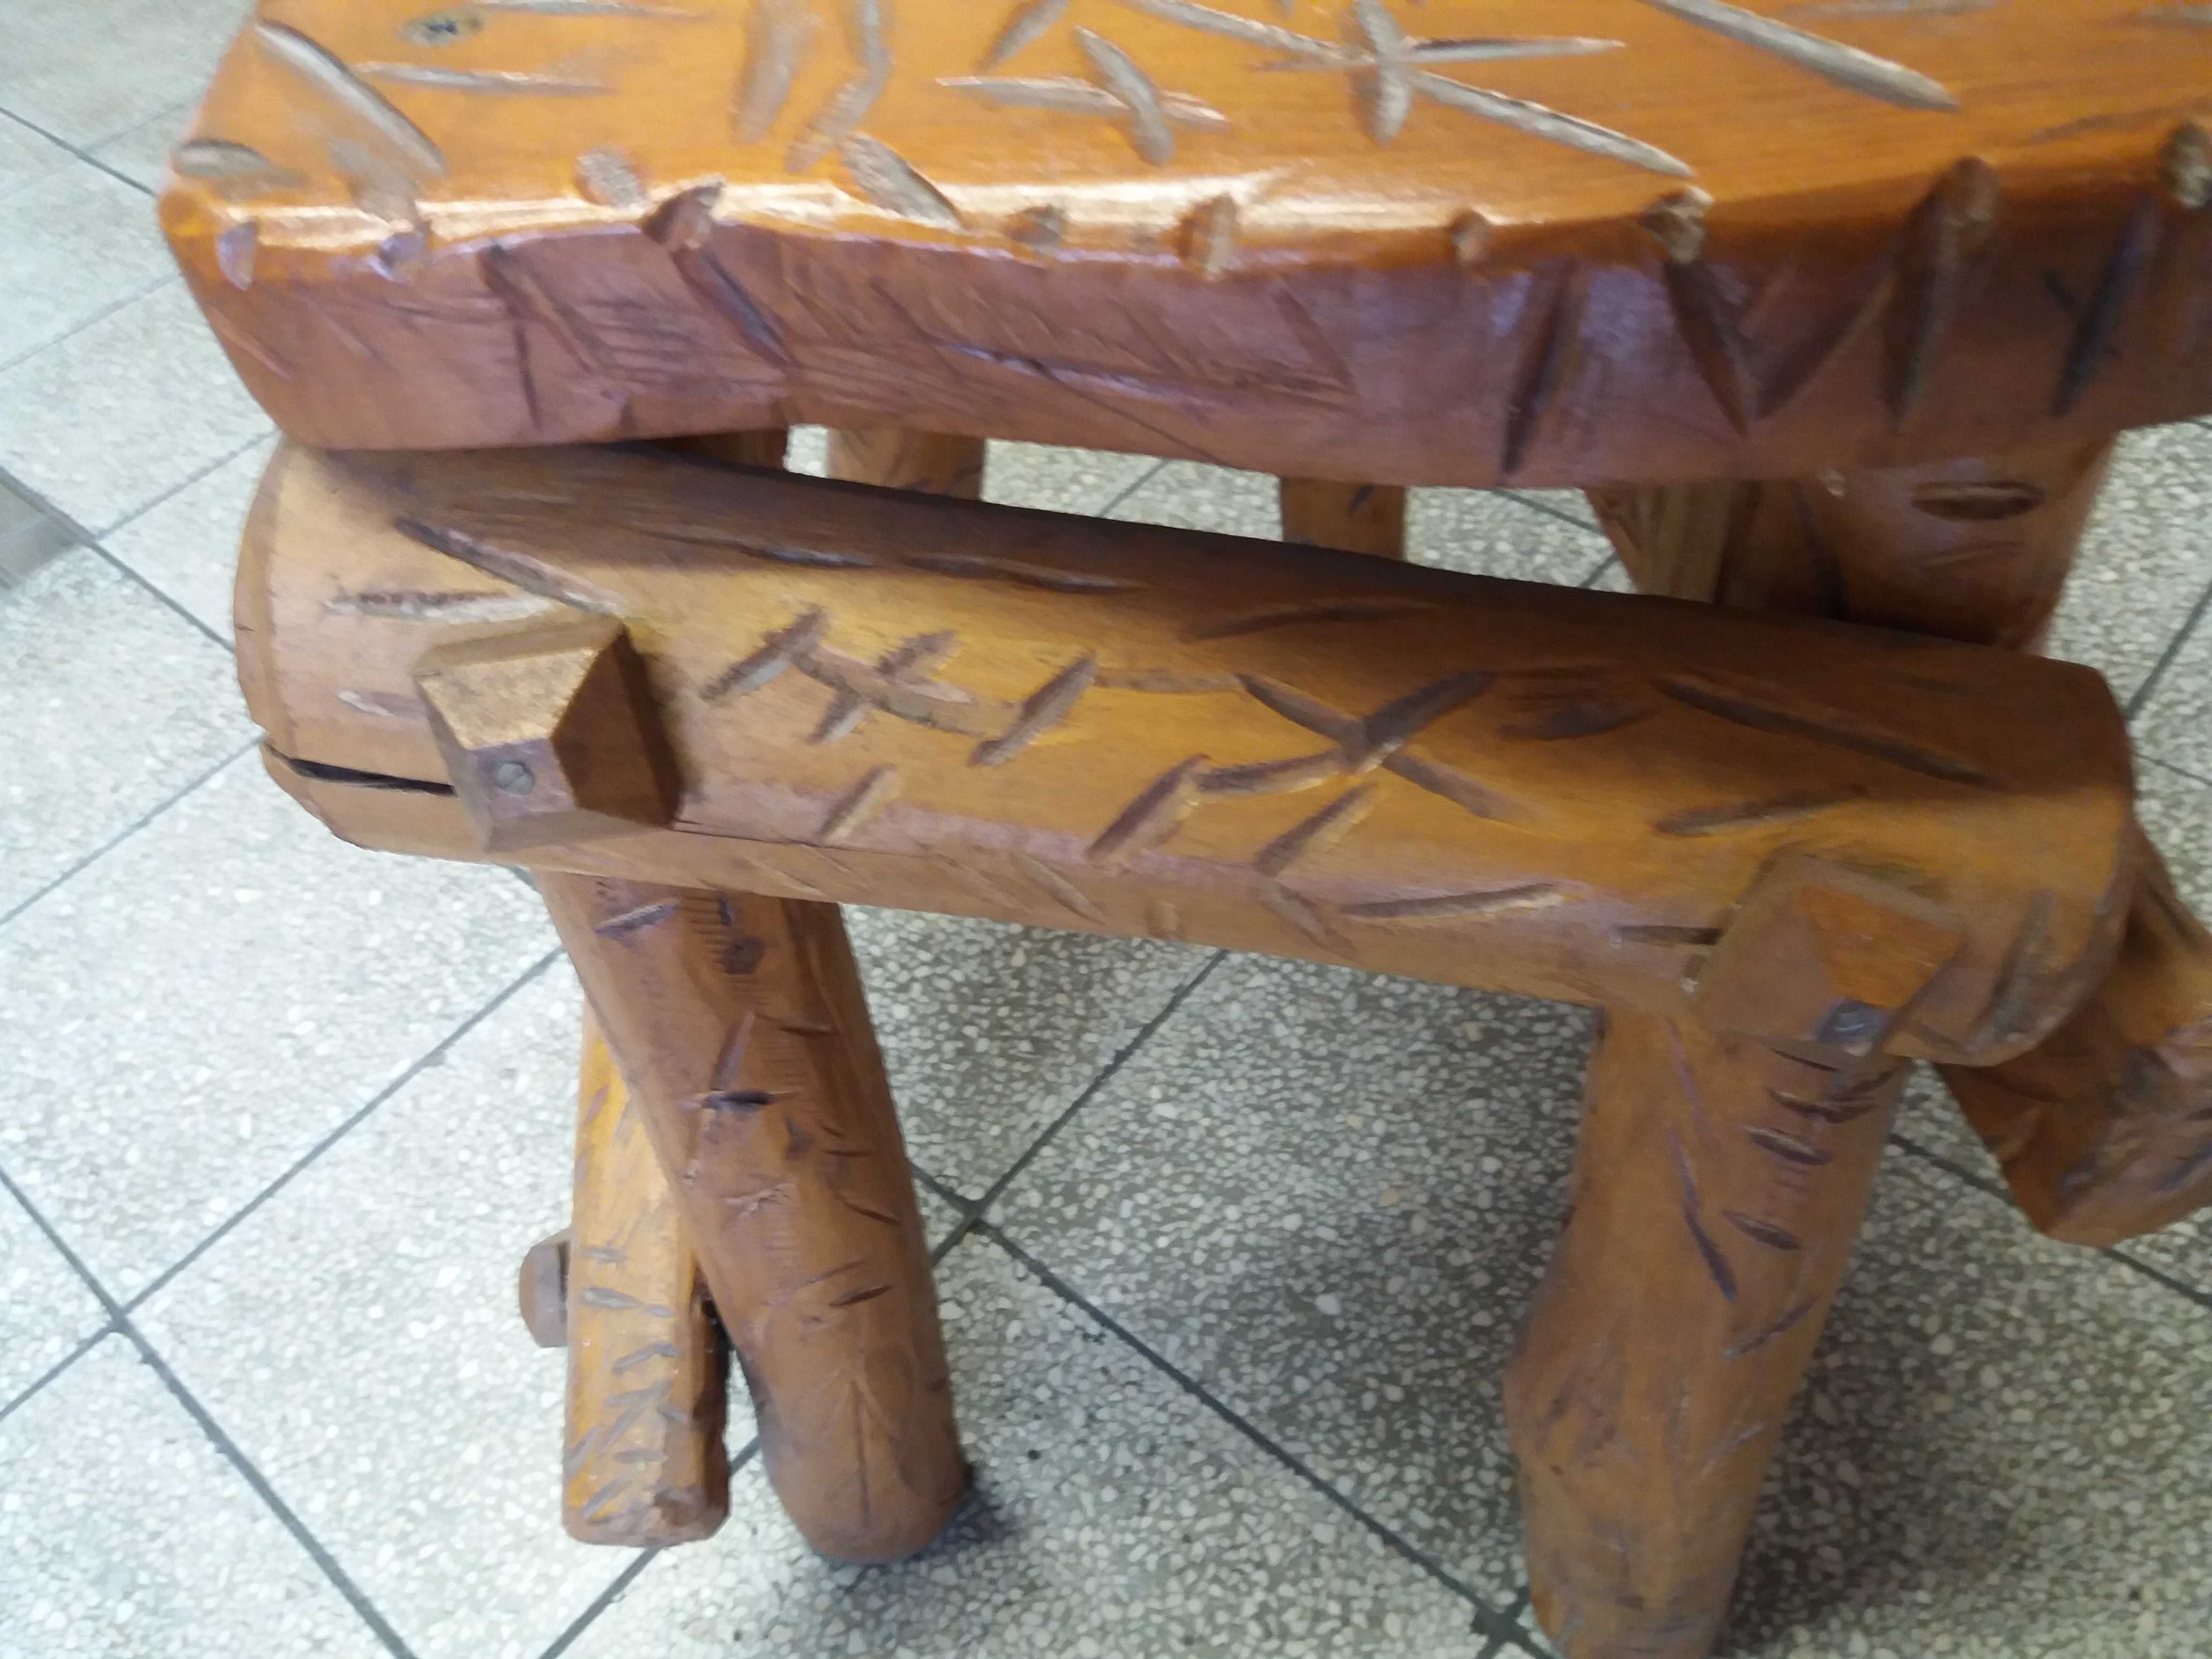 Taboret stół stolik drewno góralski styl